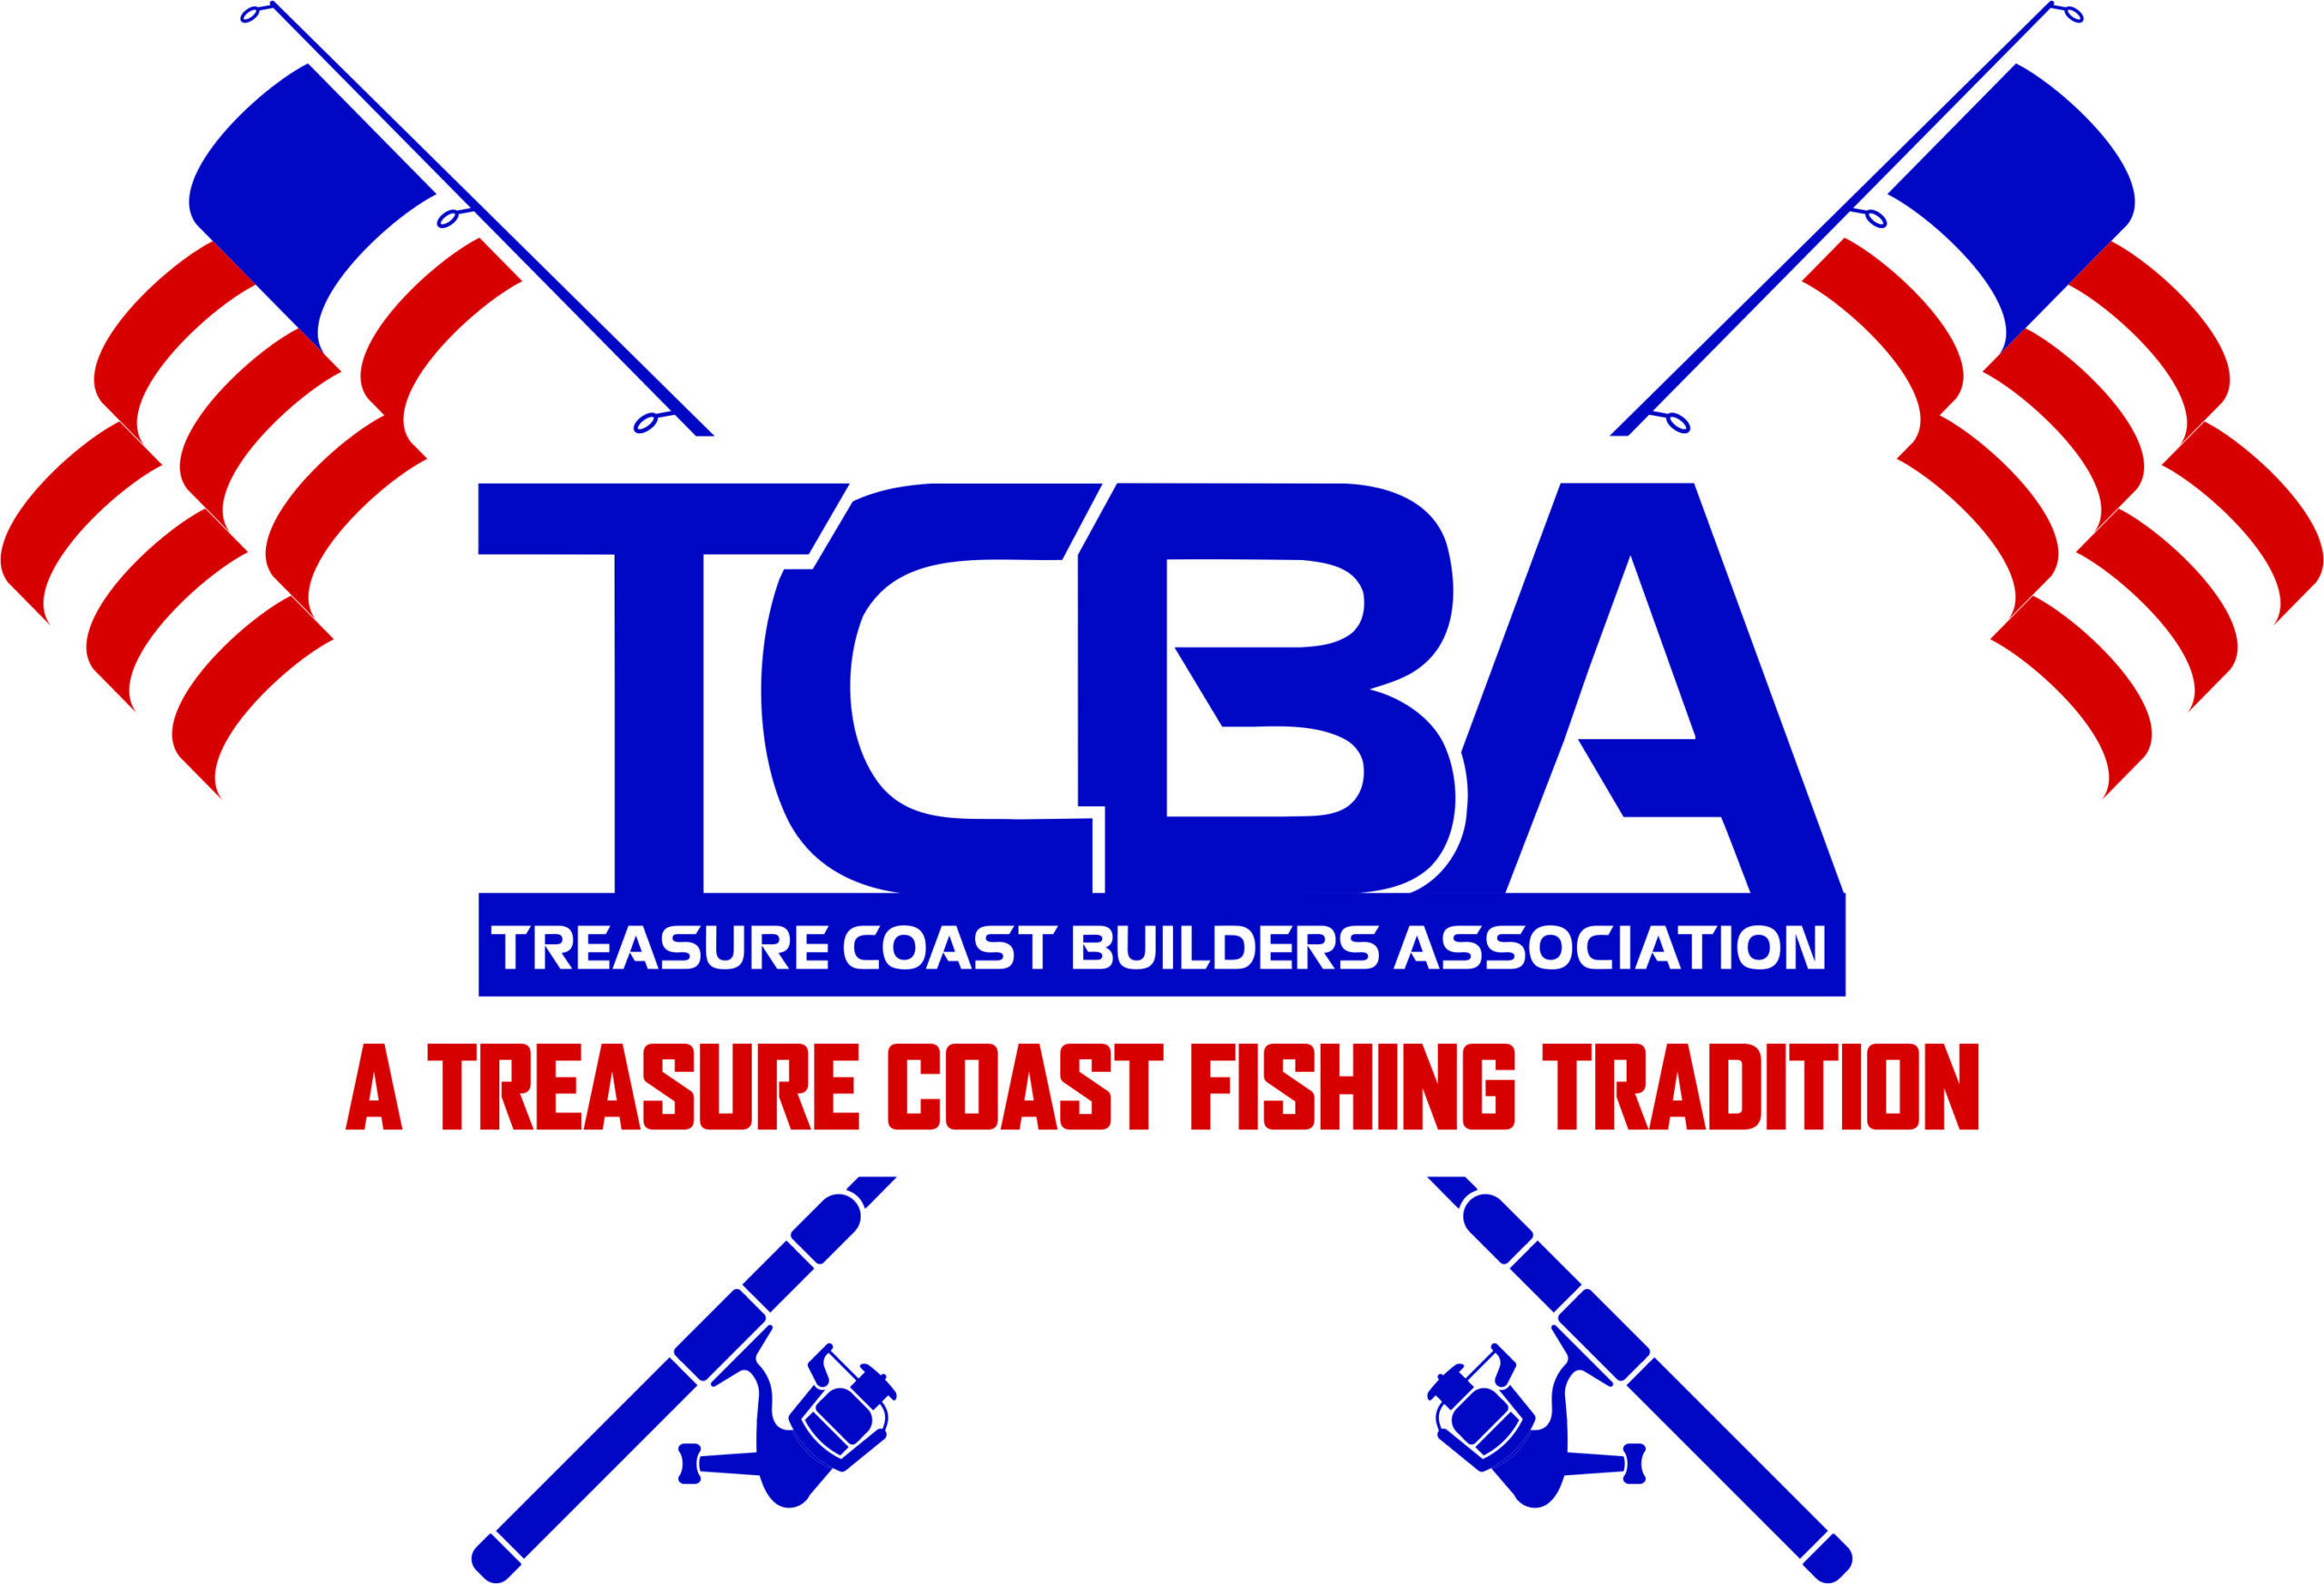 Venture Construction Group Sponsors Treasure Coast Builders Association Fishing Tournament